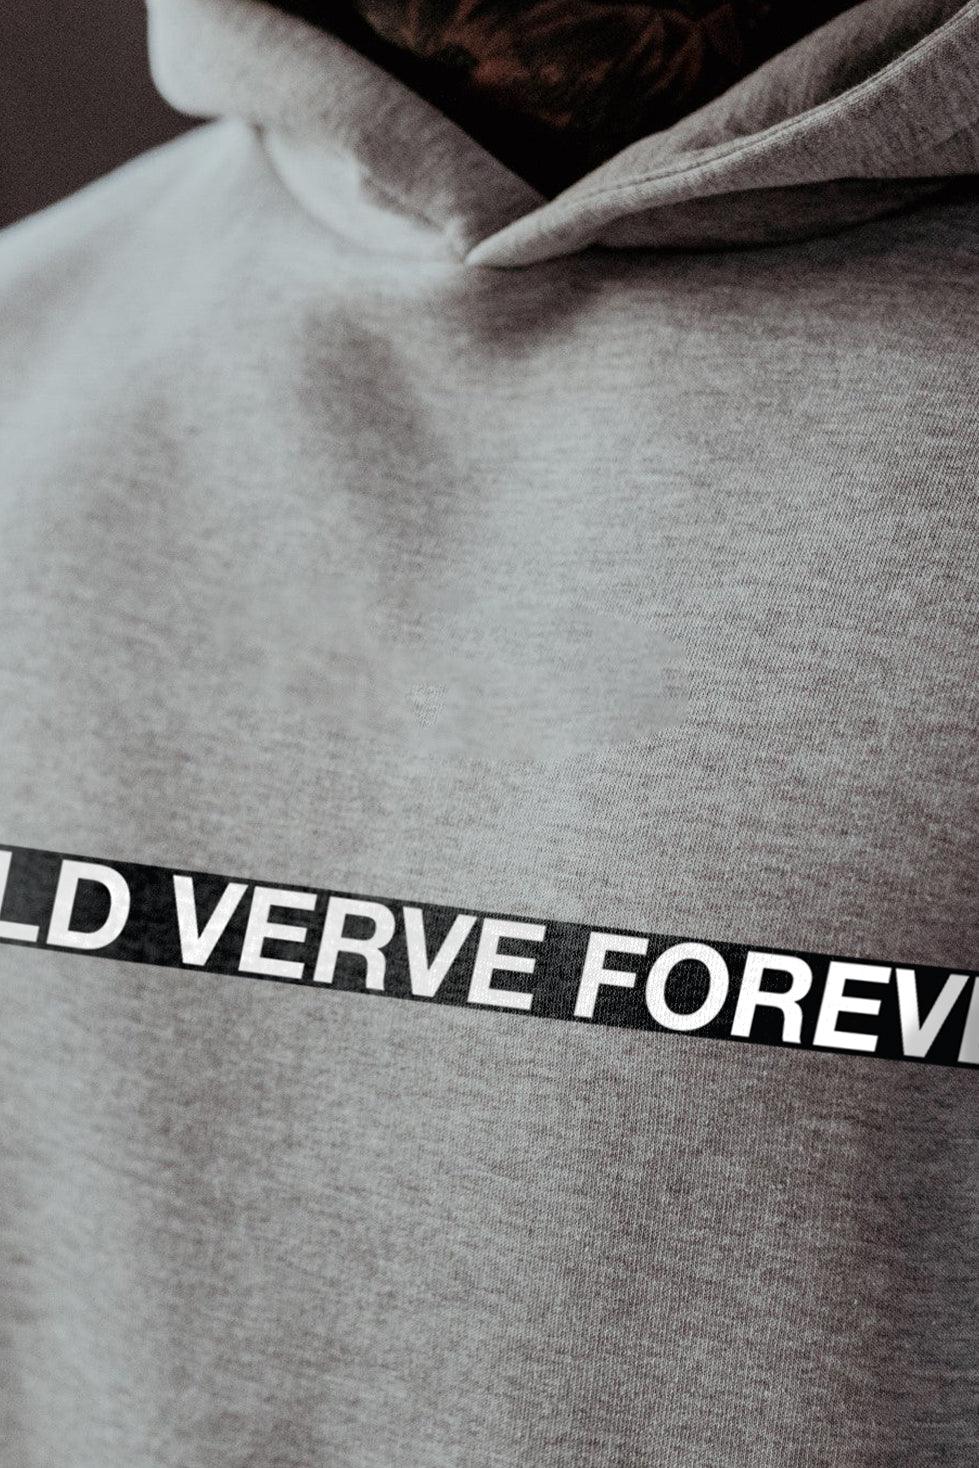 WILD VERVE FOREVER OVERSIZED HOODIE (GREY MELANGE) - THEWILDVERVE